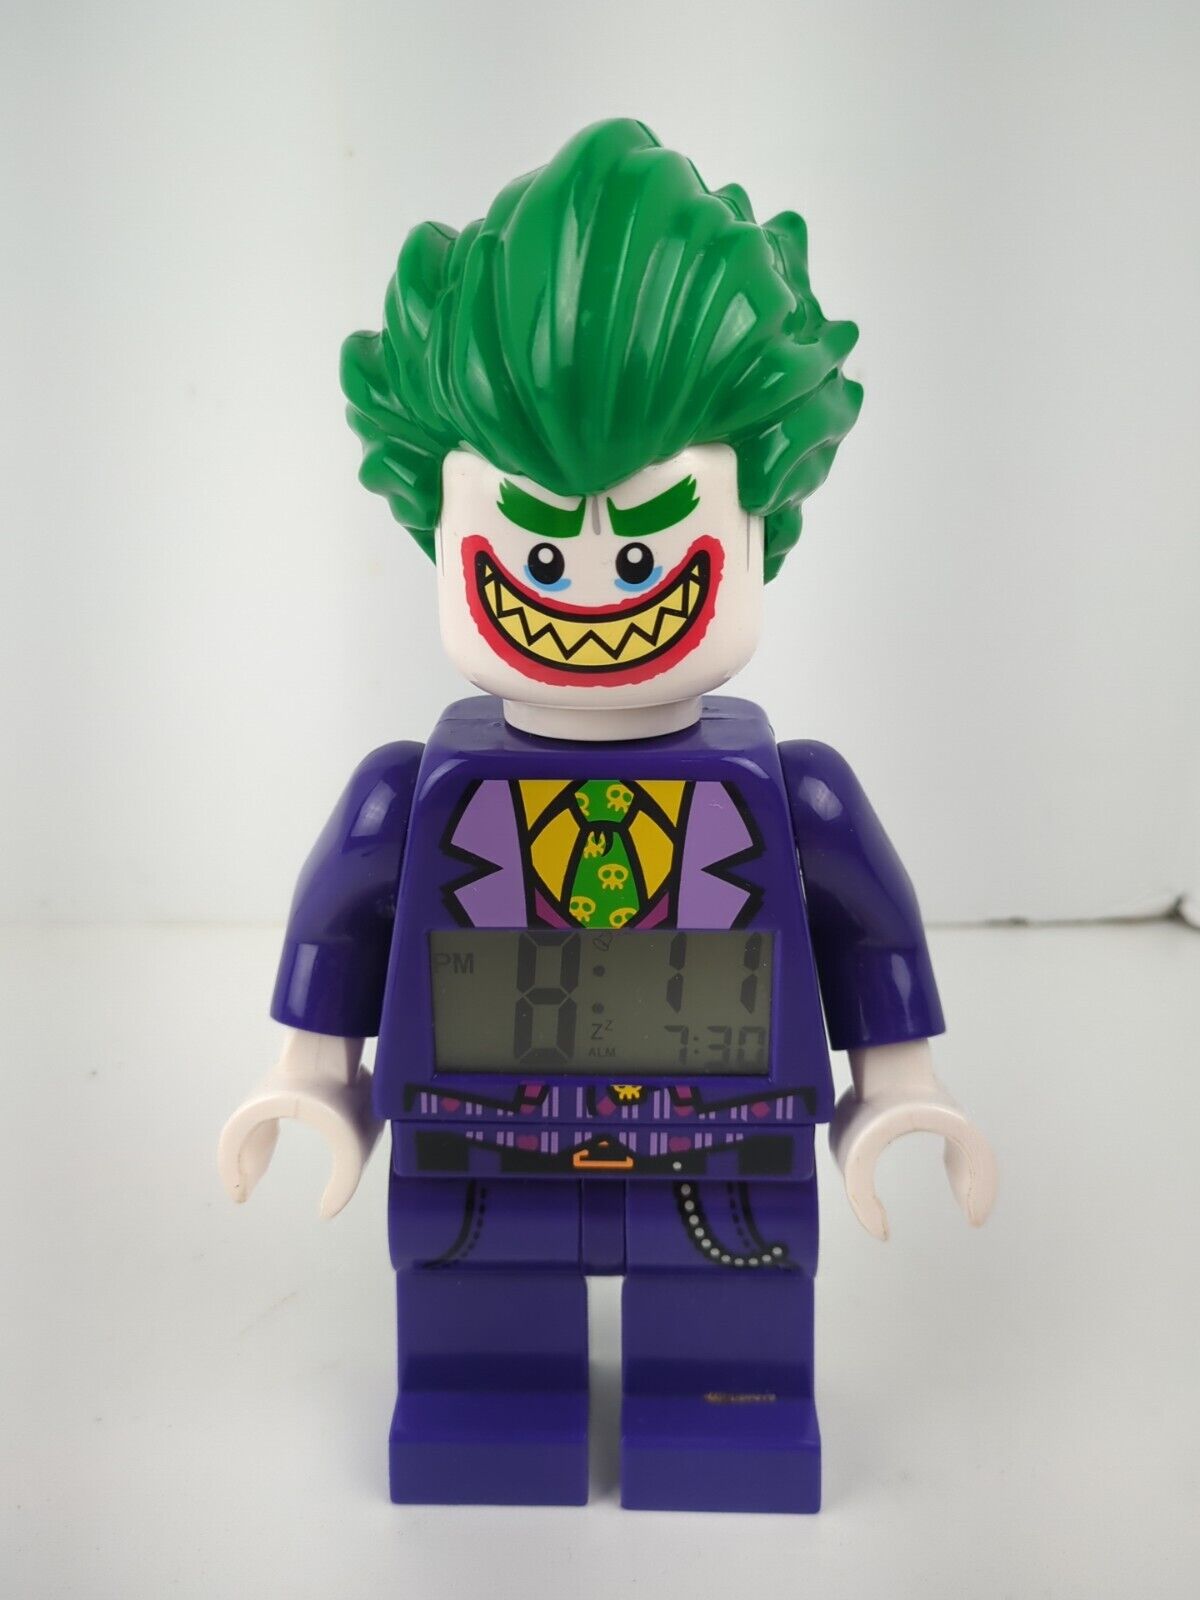 Lego Joker Digital Alarm Clock, The Lego Batman Movie, Works Well